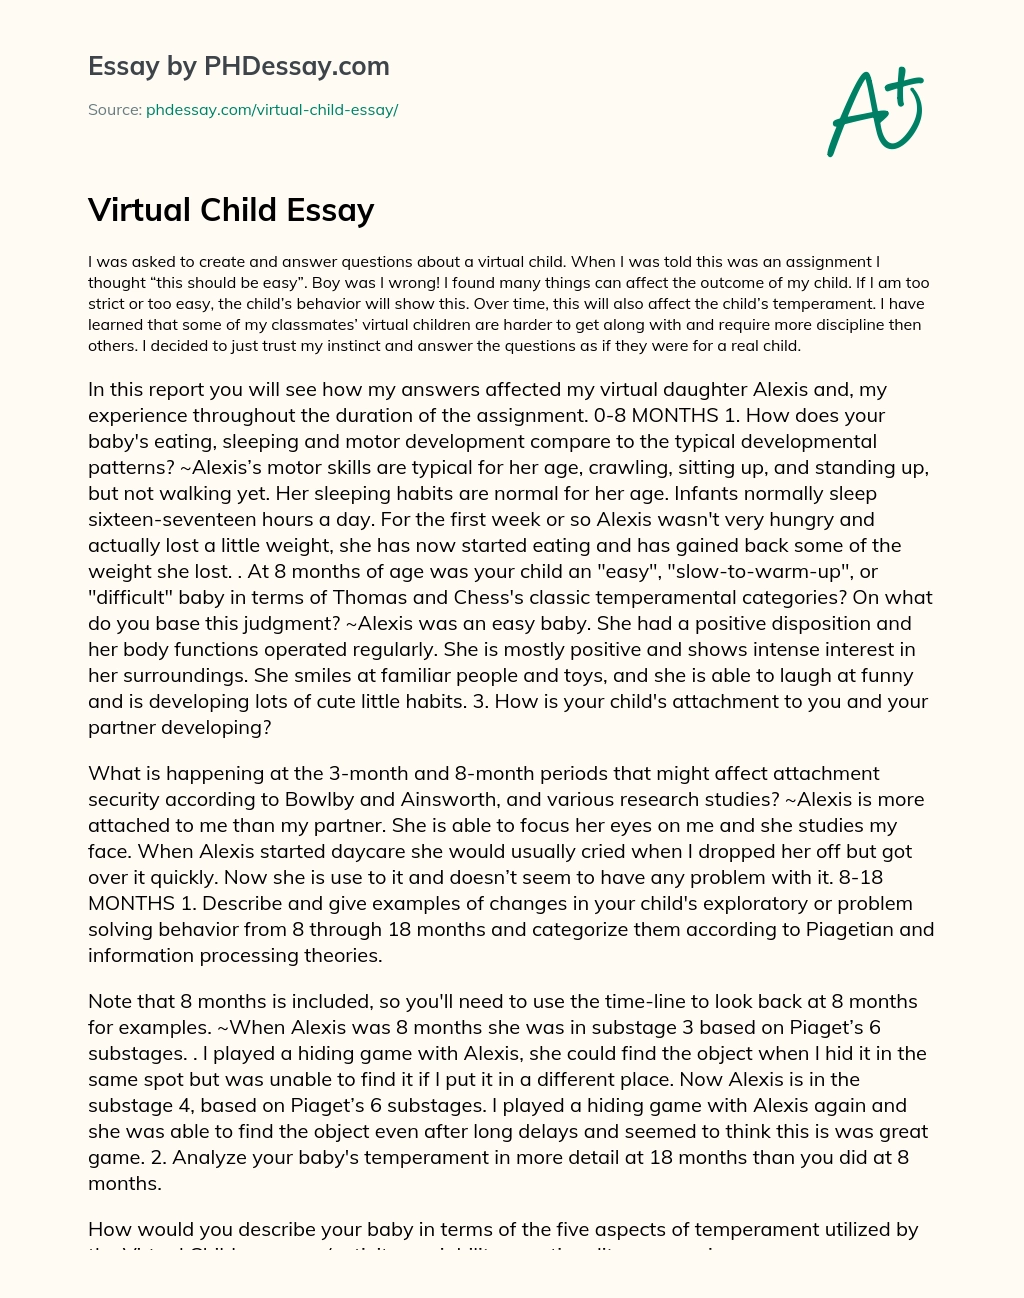 Virtual Child Essay essay